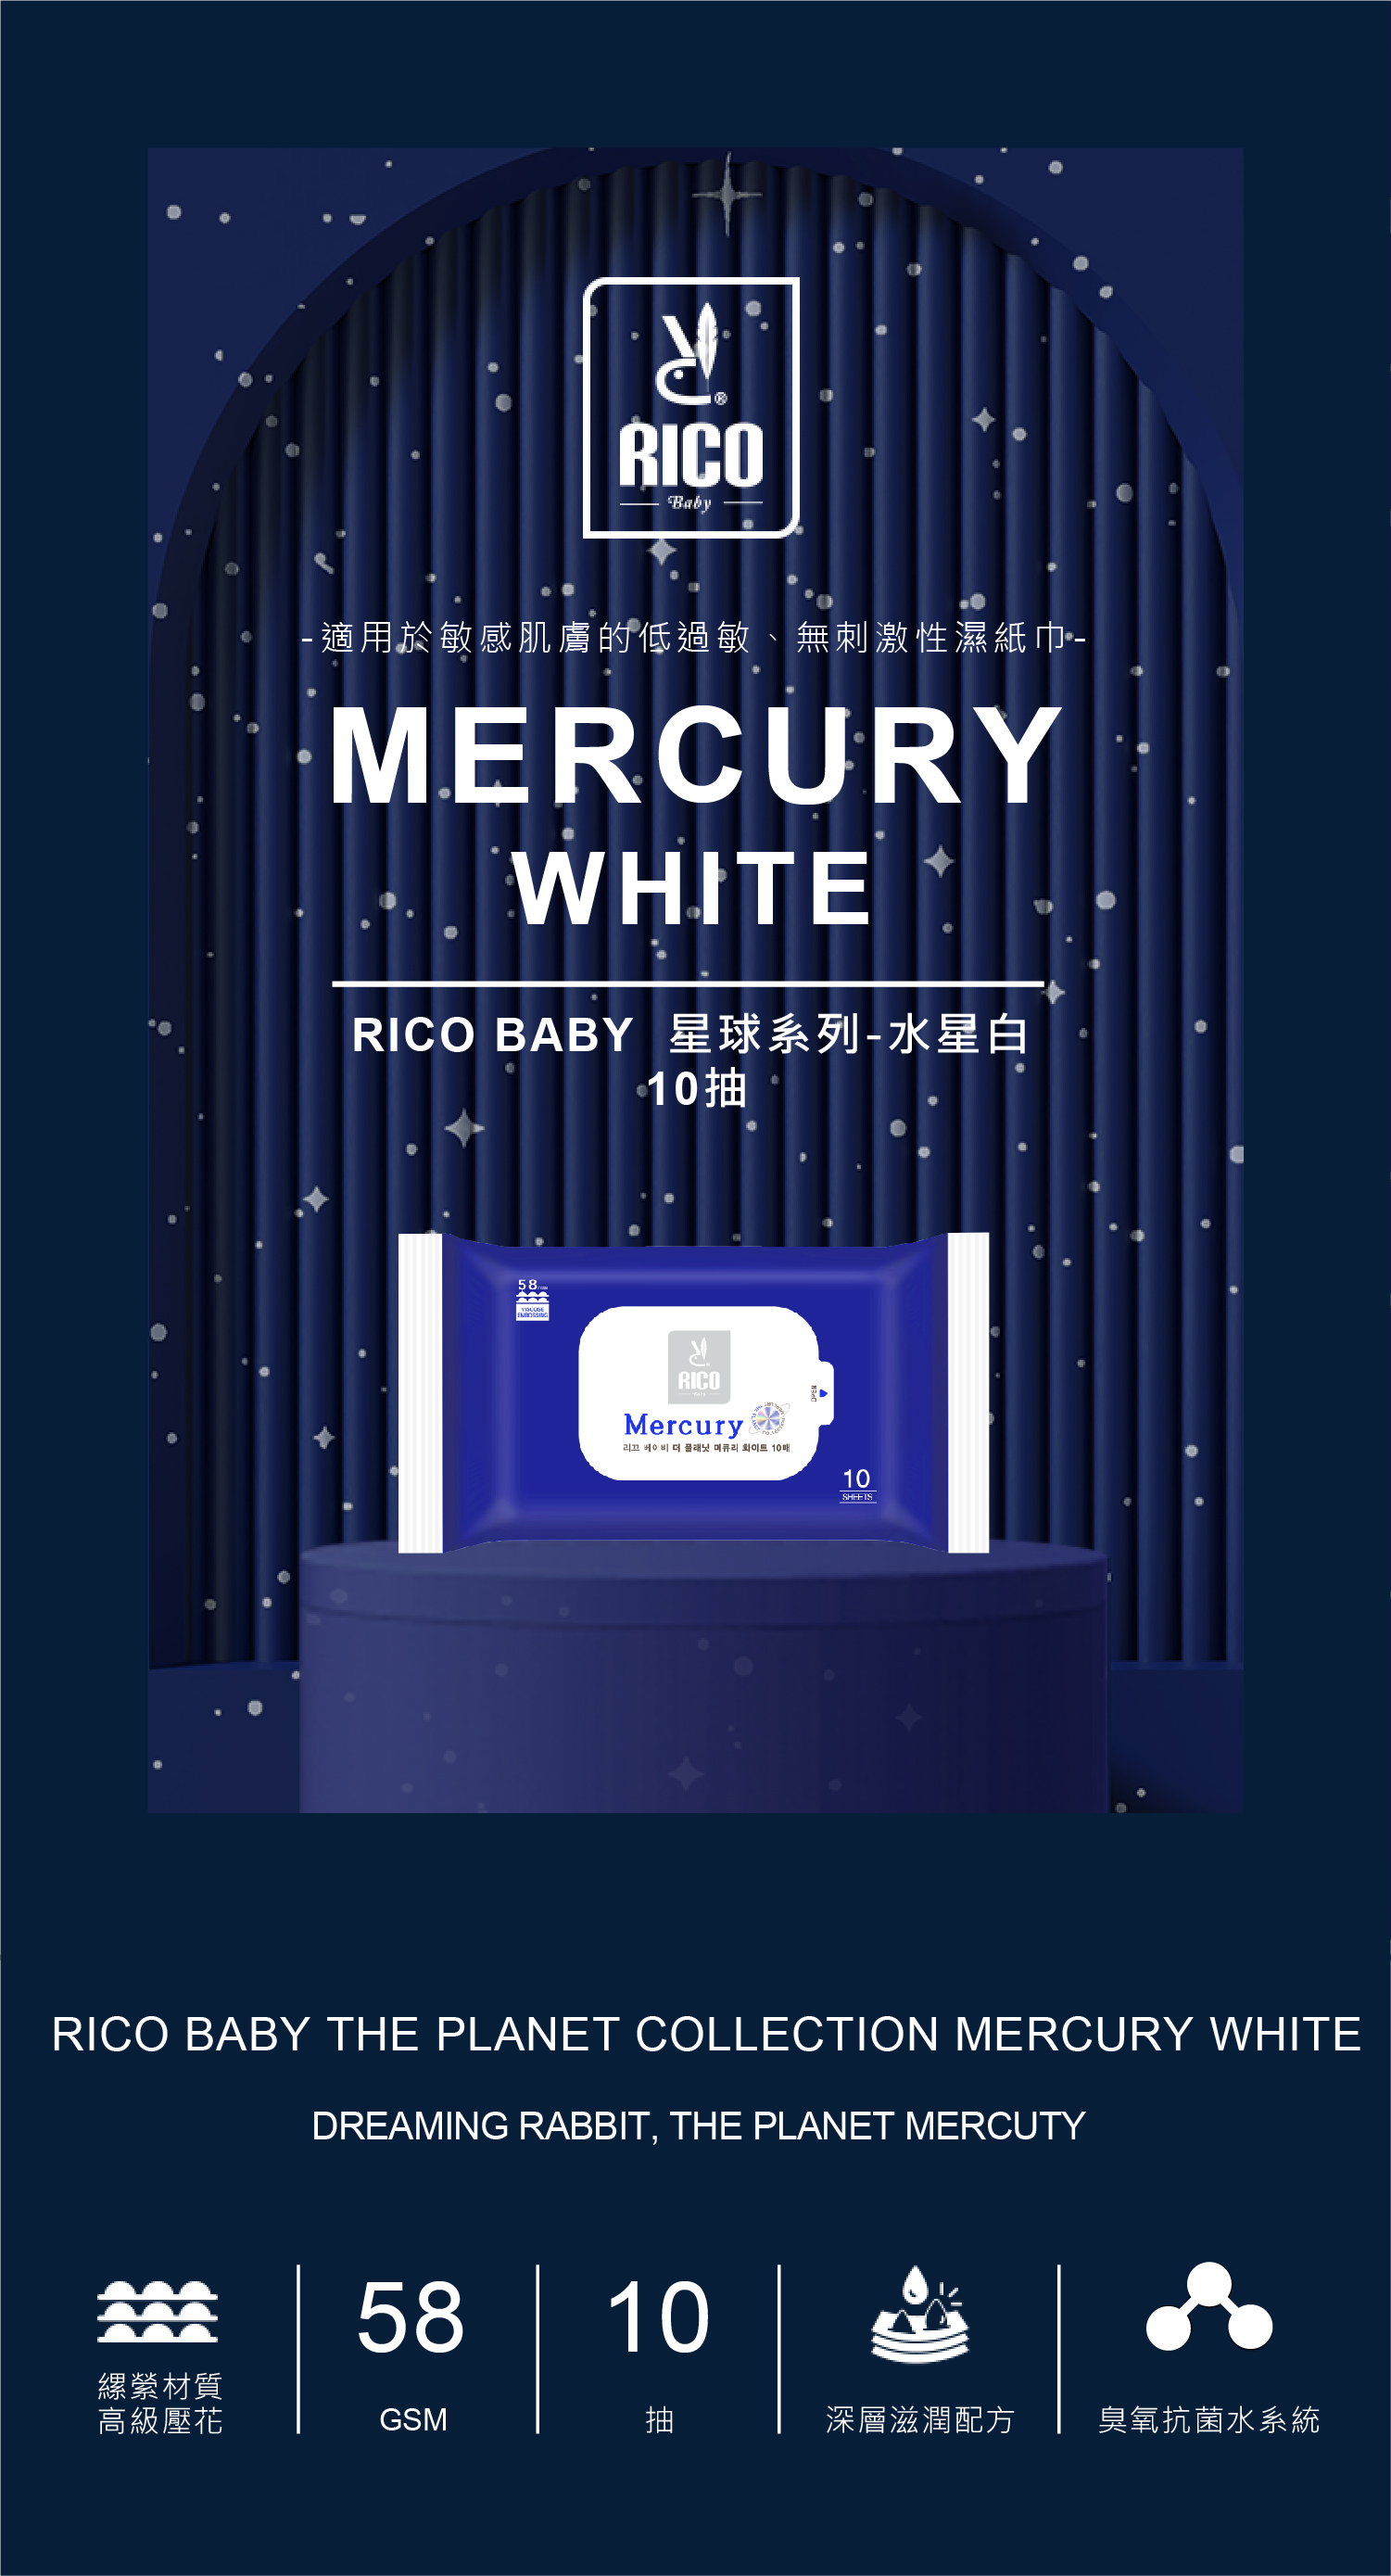 02.mercury_white-01